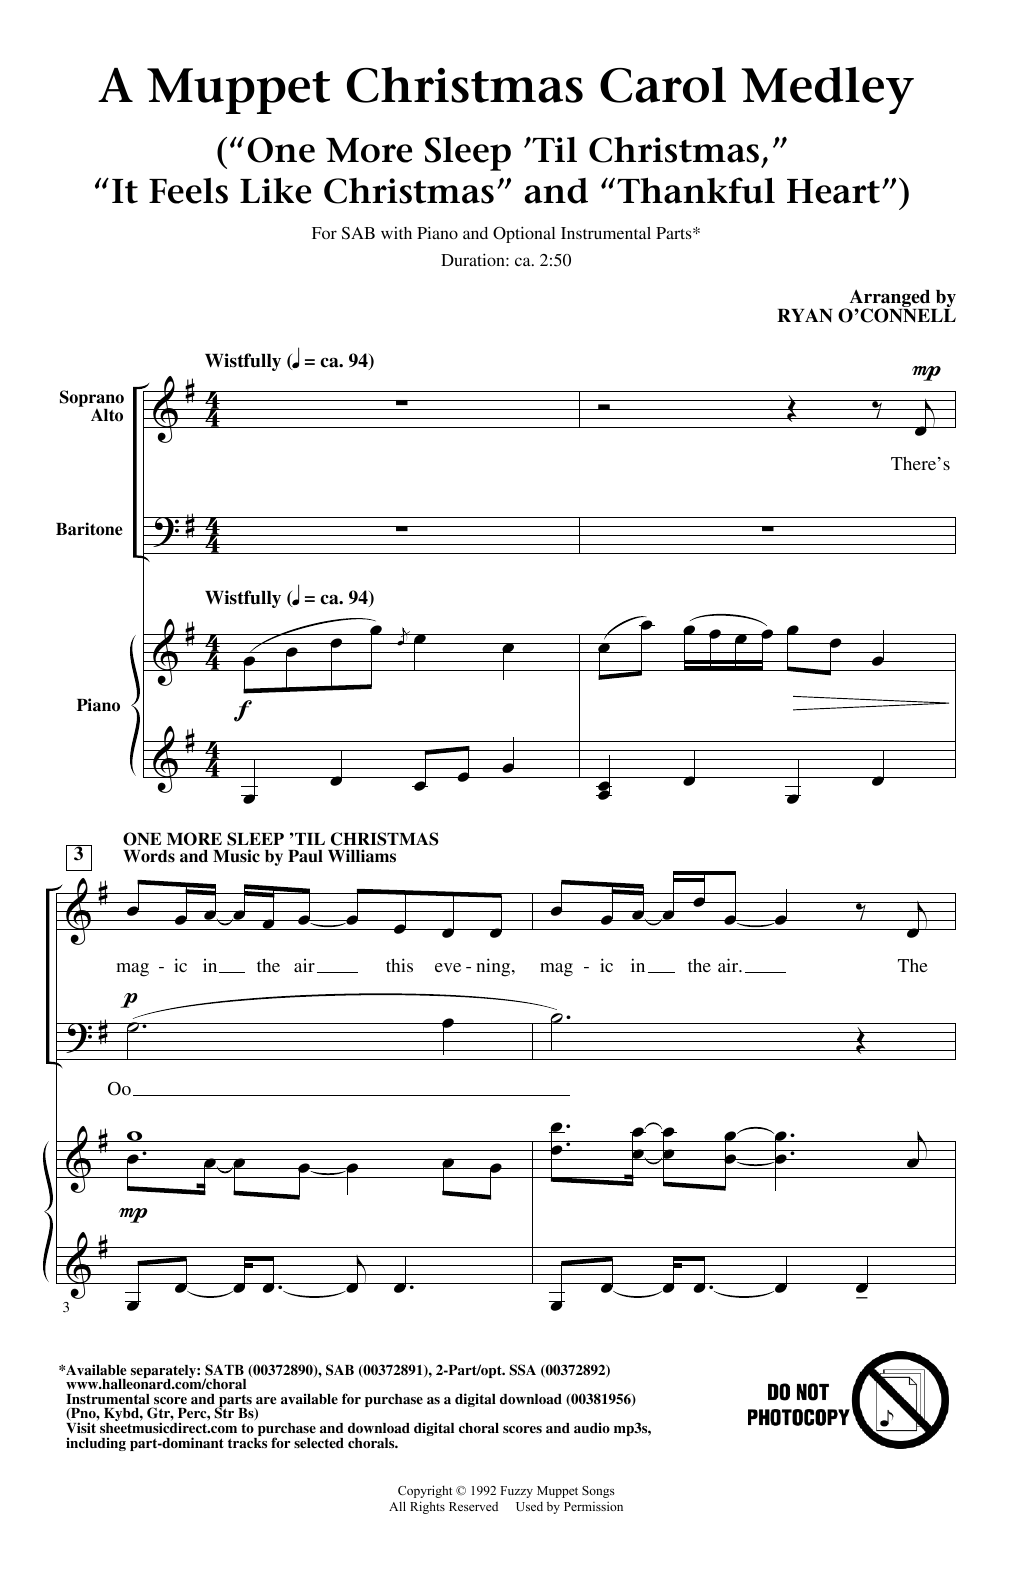 Ryan O'Connell Muppet Christmas Carol Medley (from The Muppet Christmas Carol) sheet music notes and chords arranged for SATB Choir